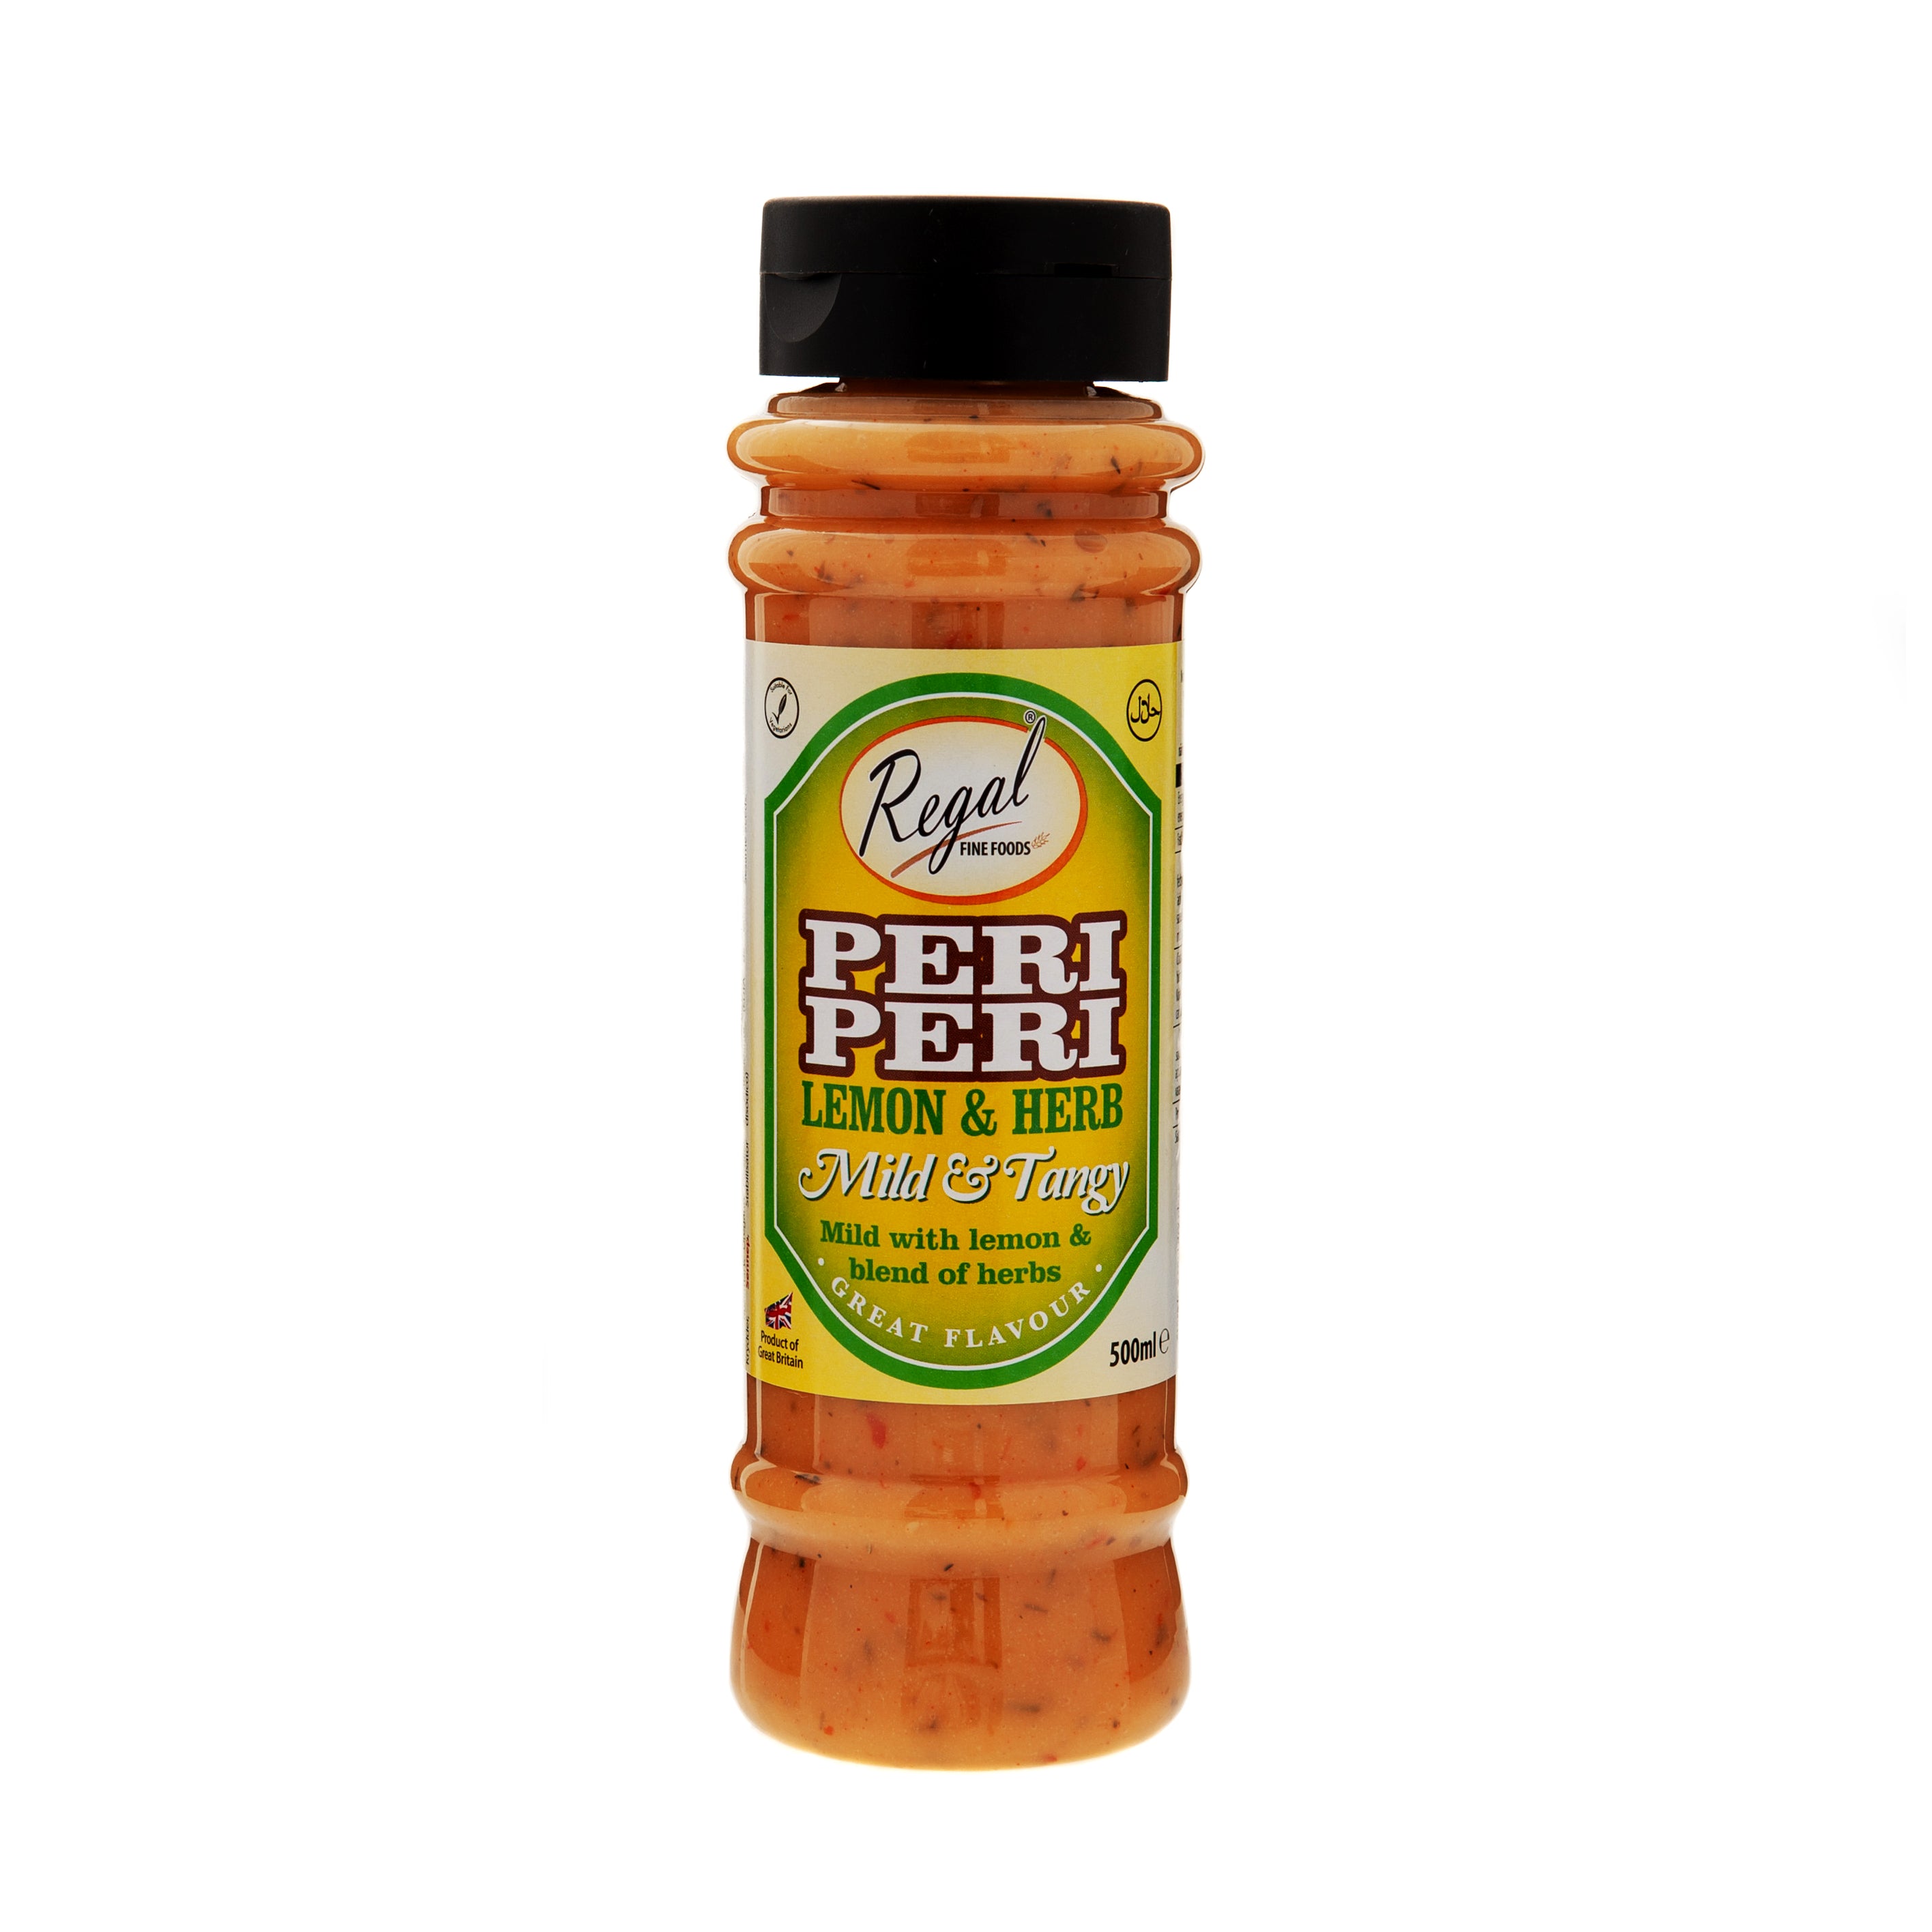 Regal Peri Peri Lemon & Herb Sauce - SaveCo Cash & Carry